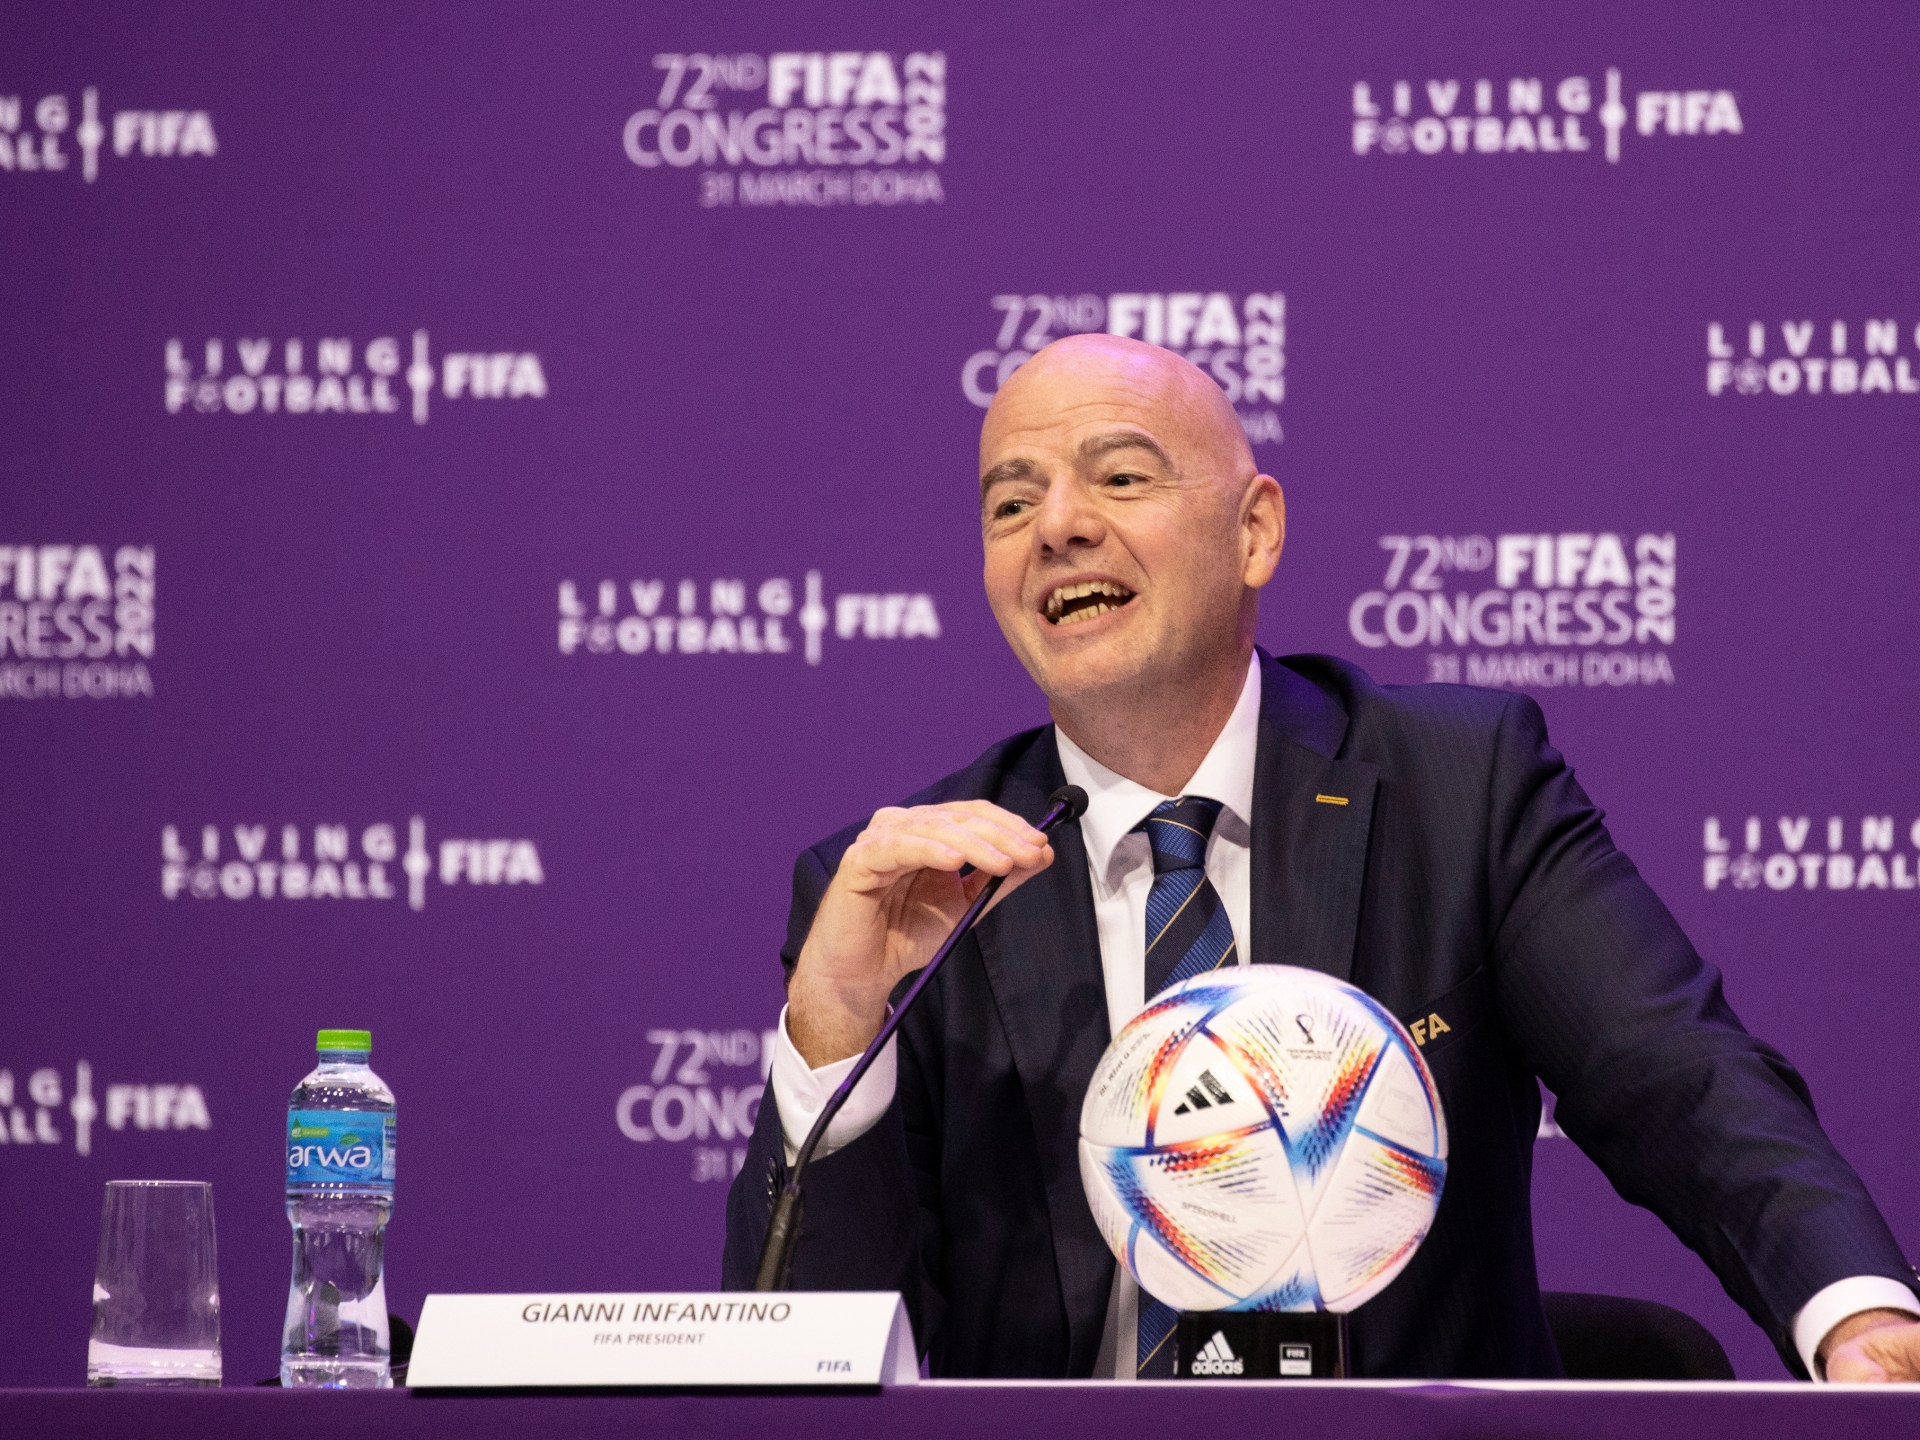 FIFA earns record .5bn revenue for Qatar World Cup | Qatar World Cup 2022